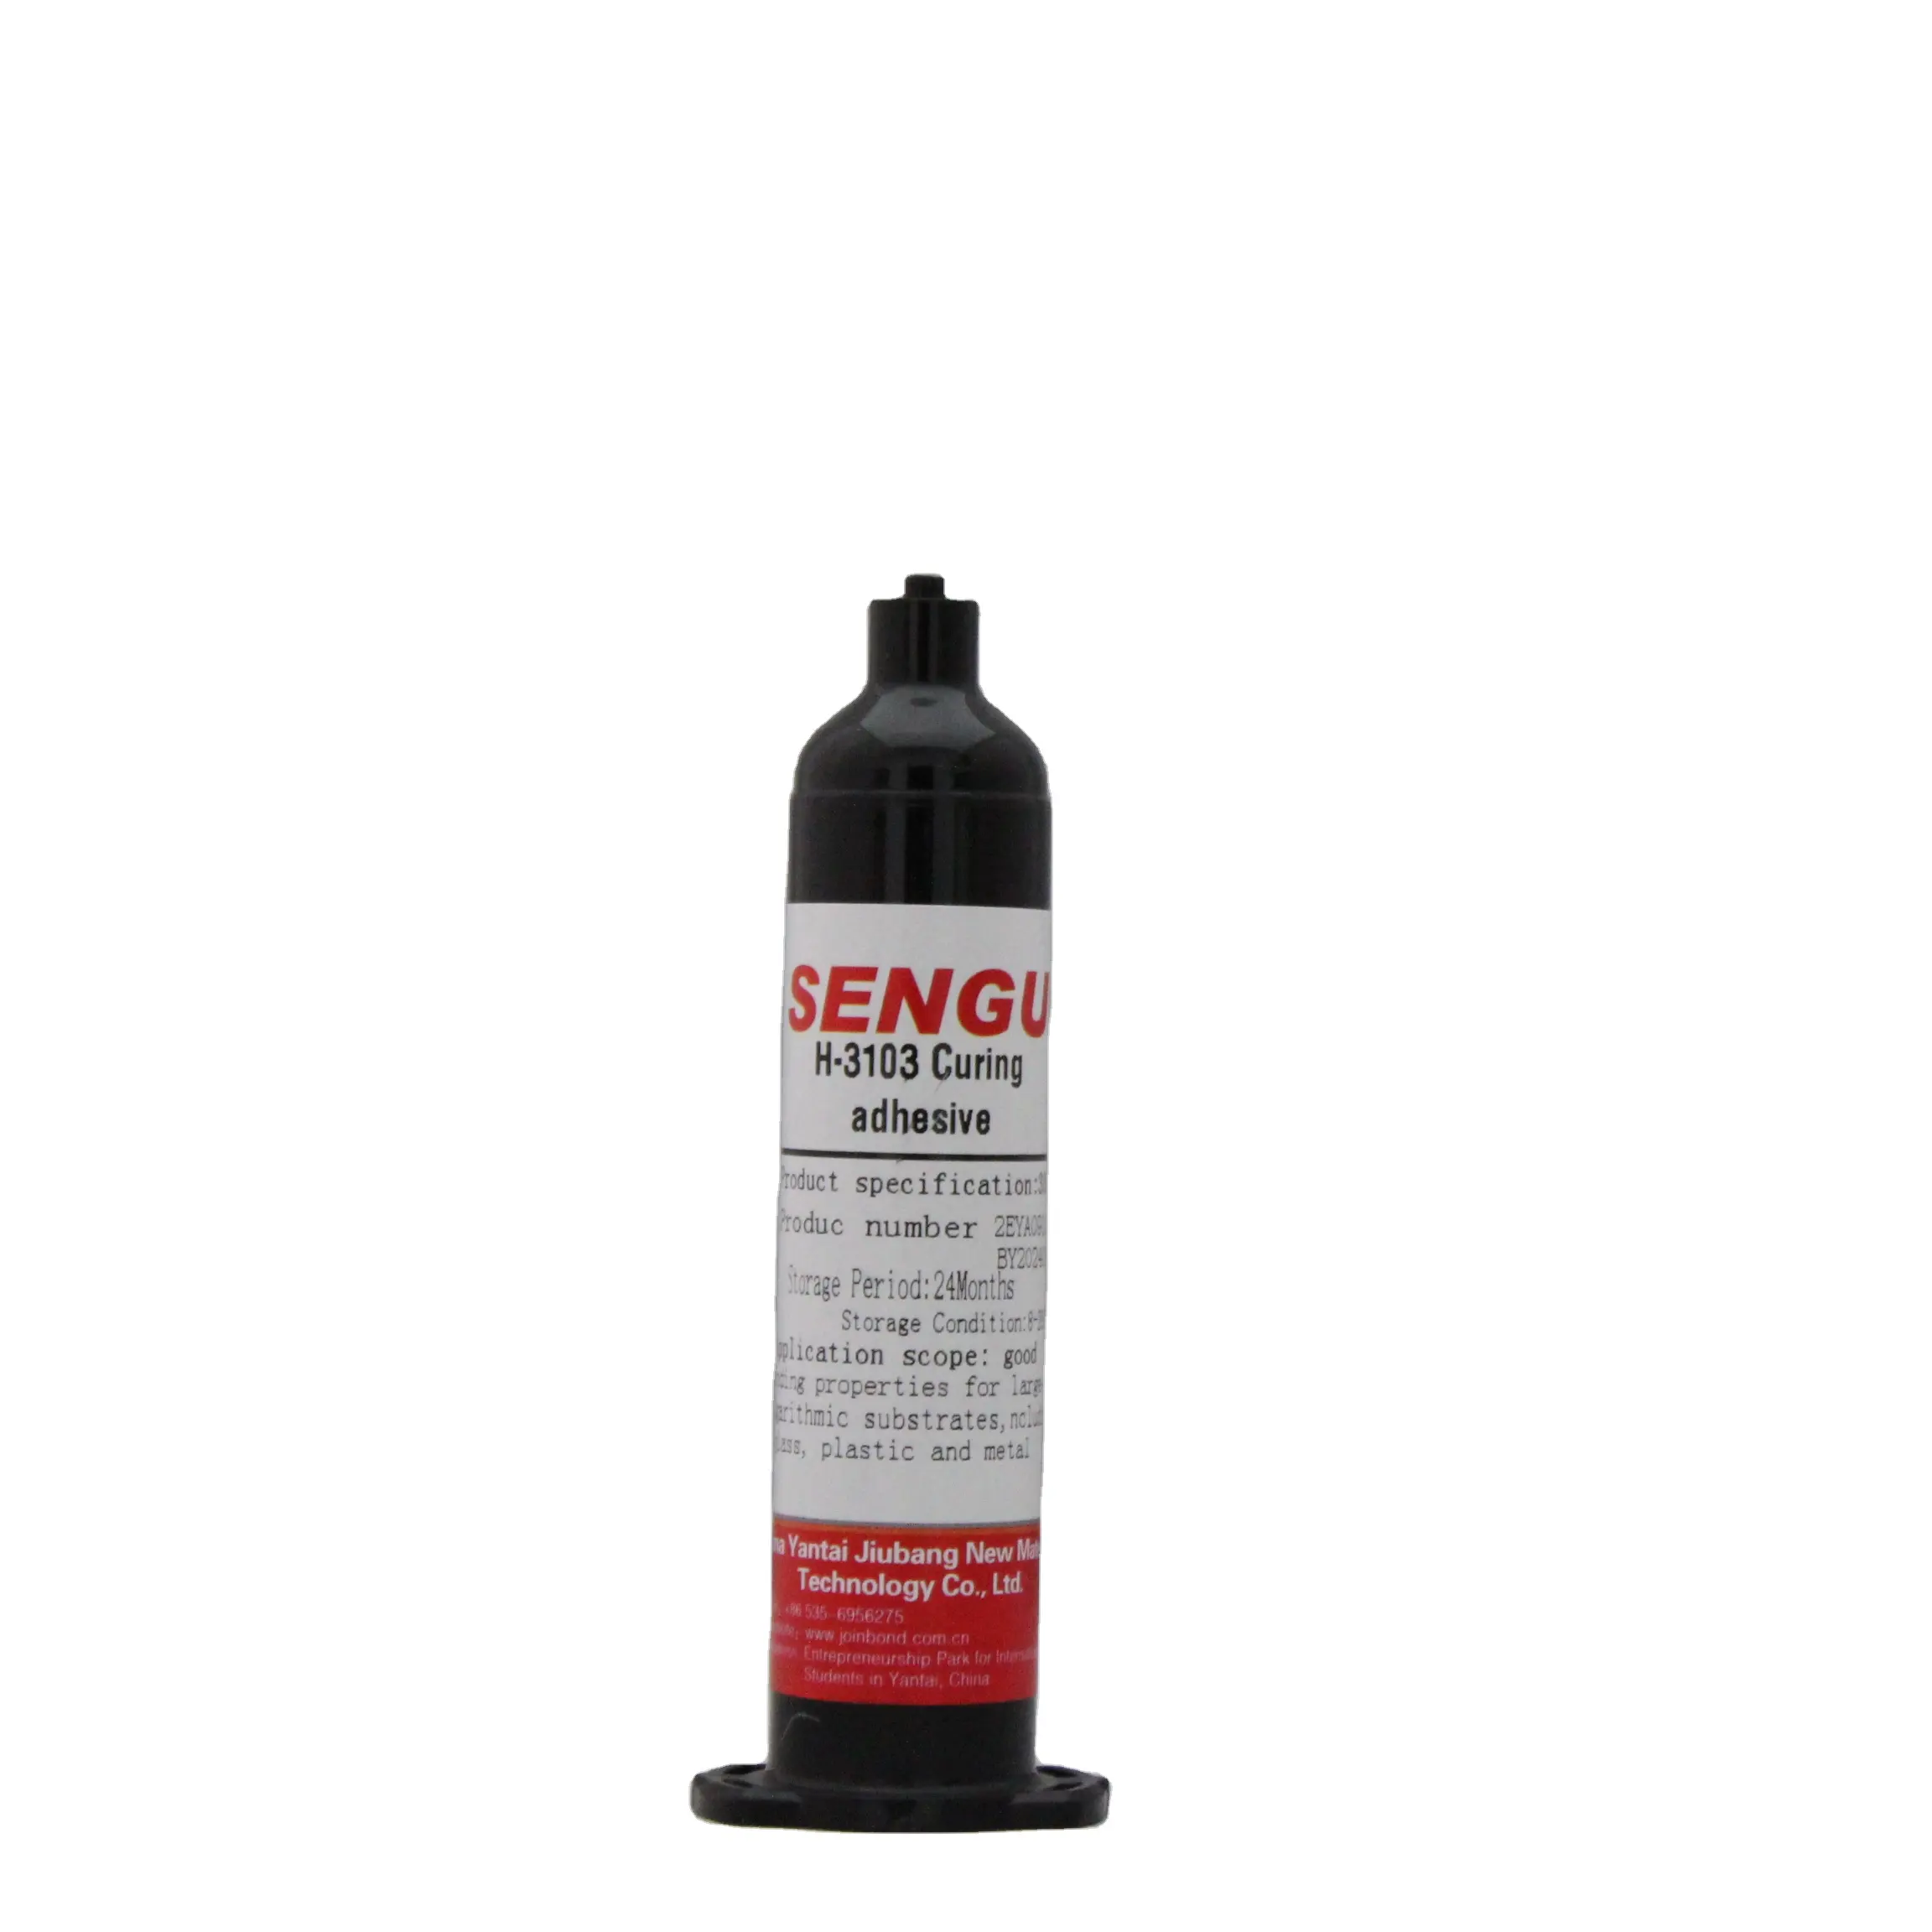 SenGu UV3103 Fast curing clear layer Liquid adhesive for Glass Metal and plastics Bonding UV Adhesive